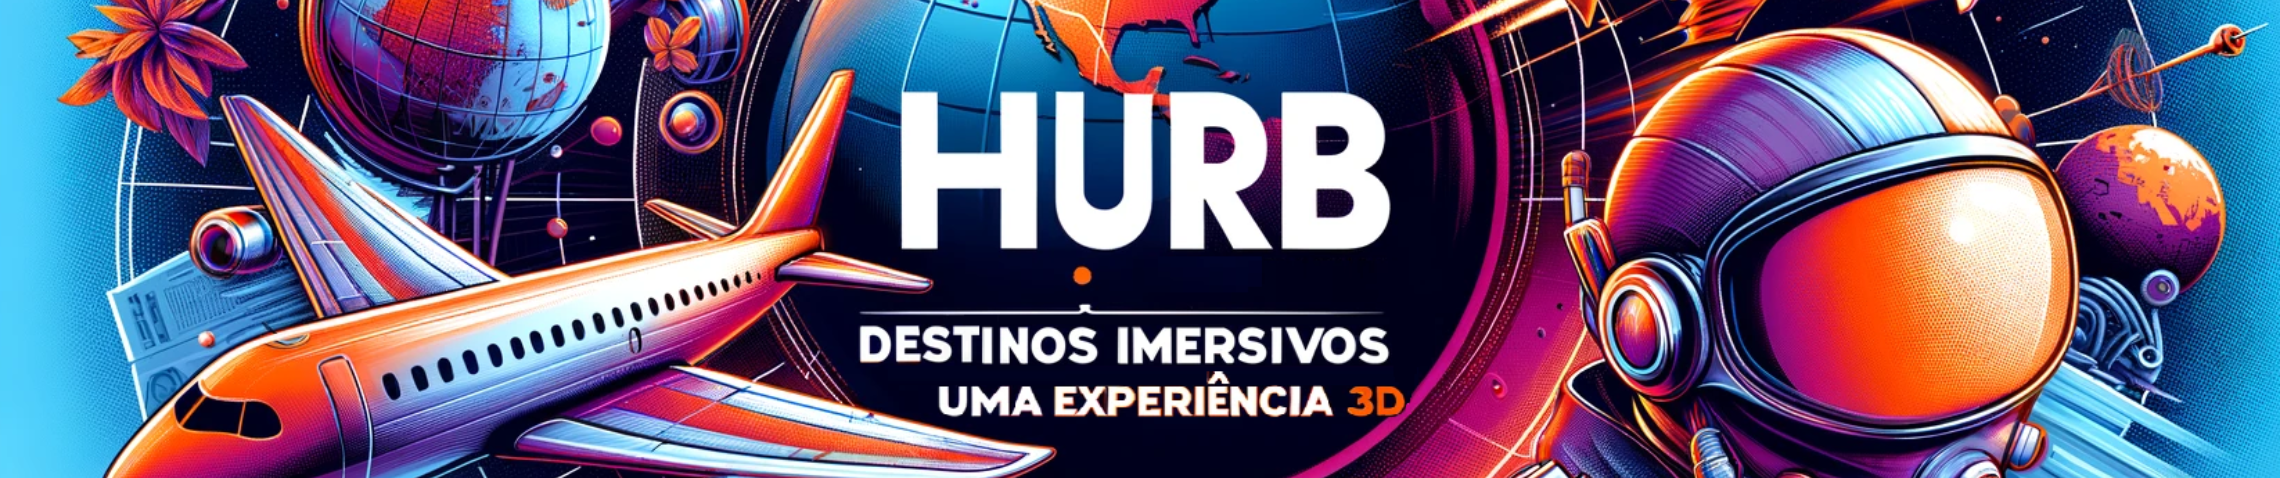 hurb-google-earth